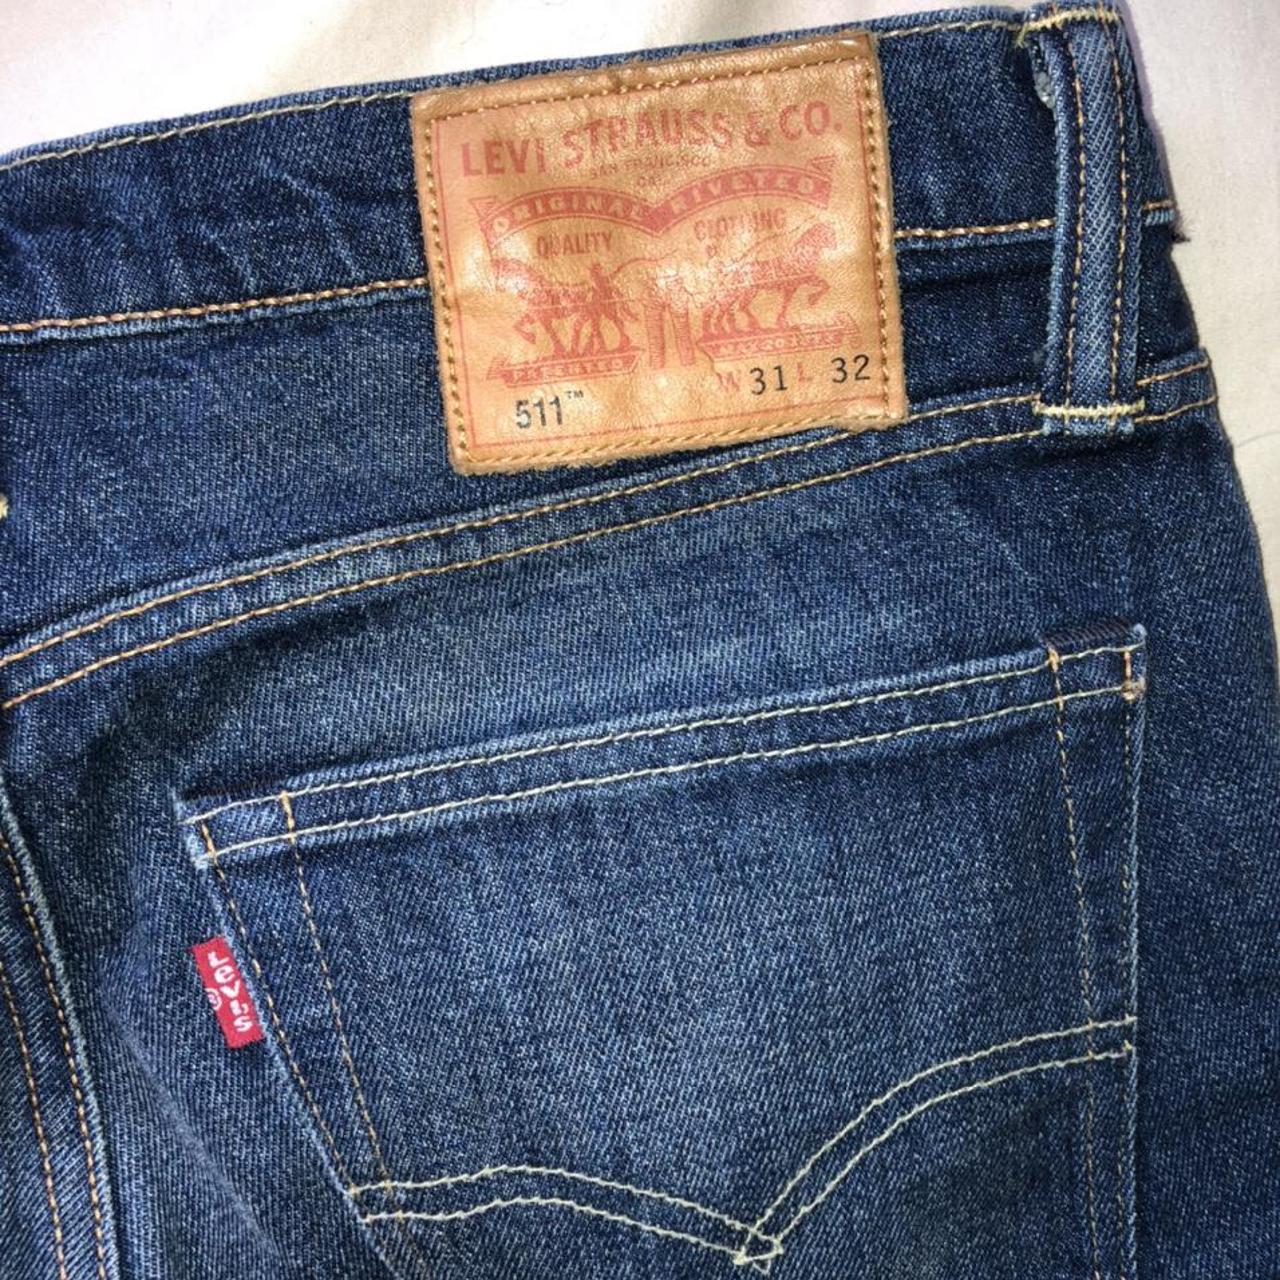 Levi’s 511 slim taper jeans. Size 31l 32w. Worn only... - Depop